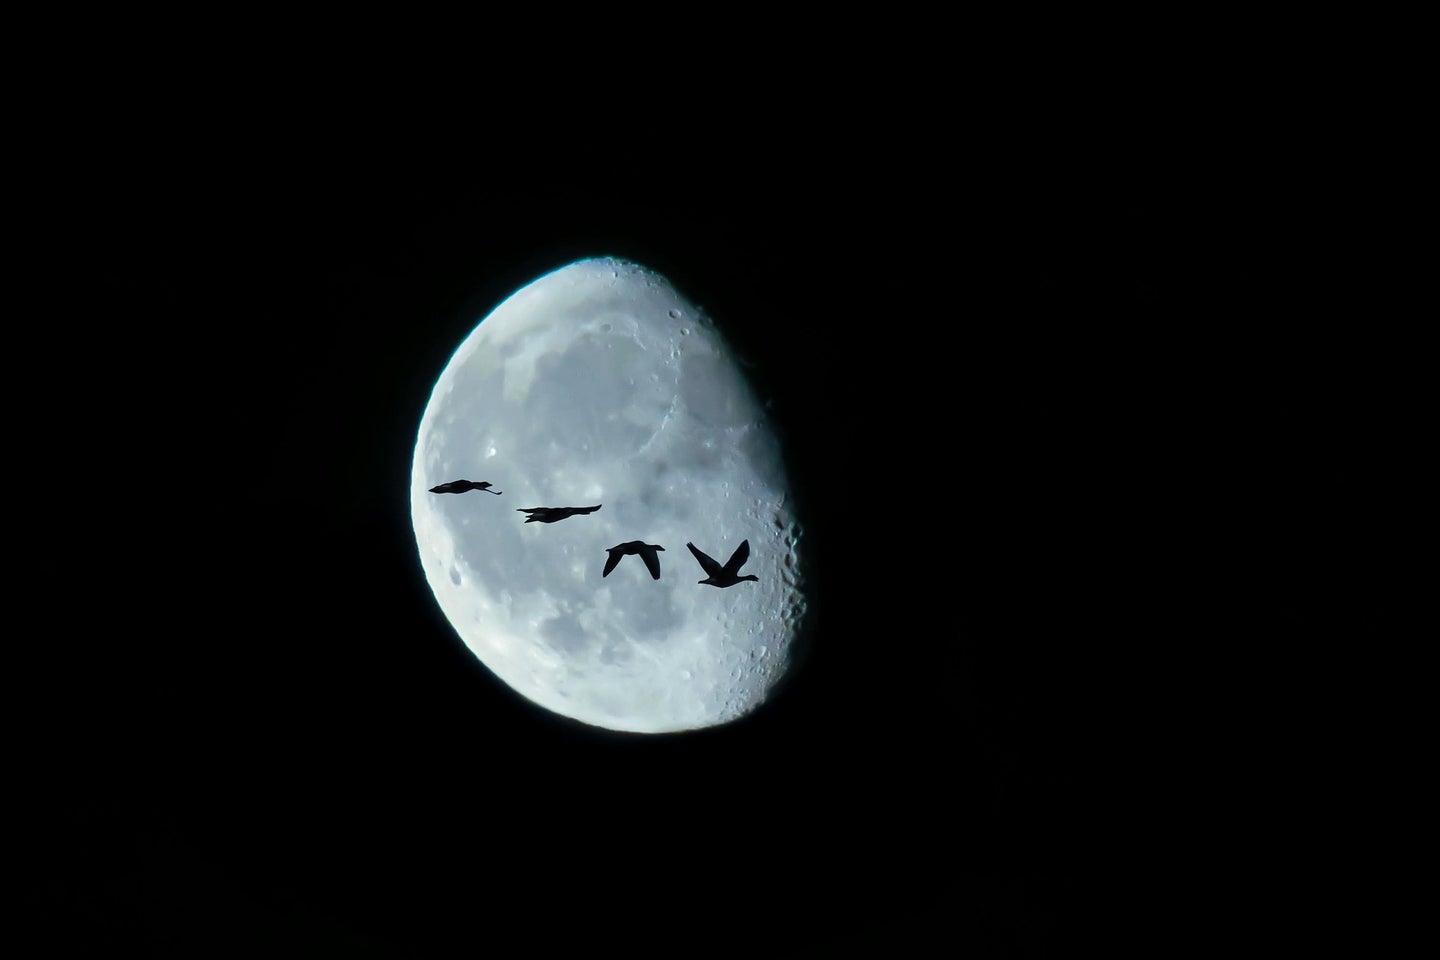 birds flying across the moon at night